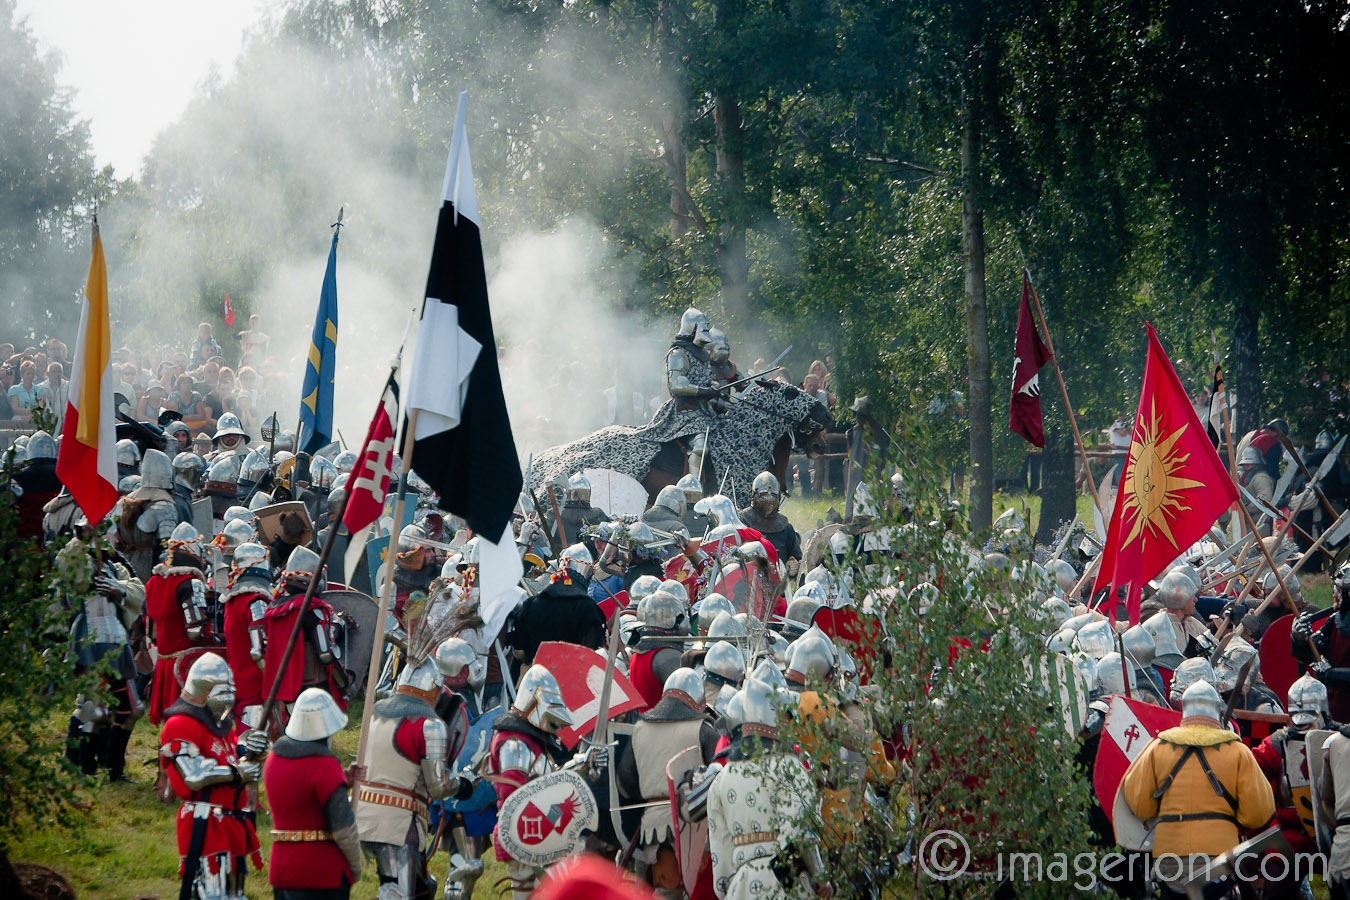 Medieval battlefield armies